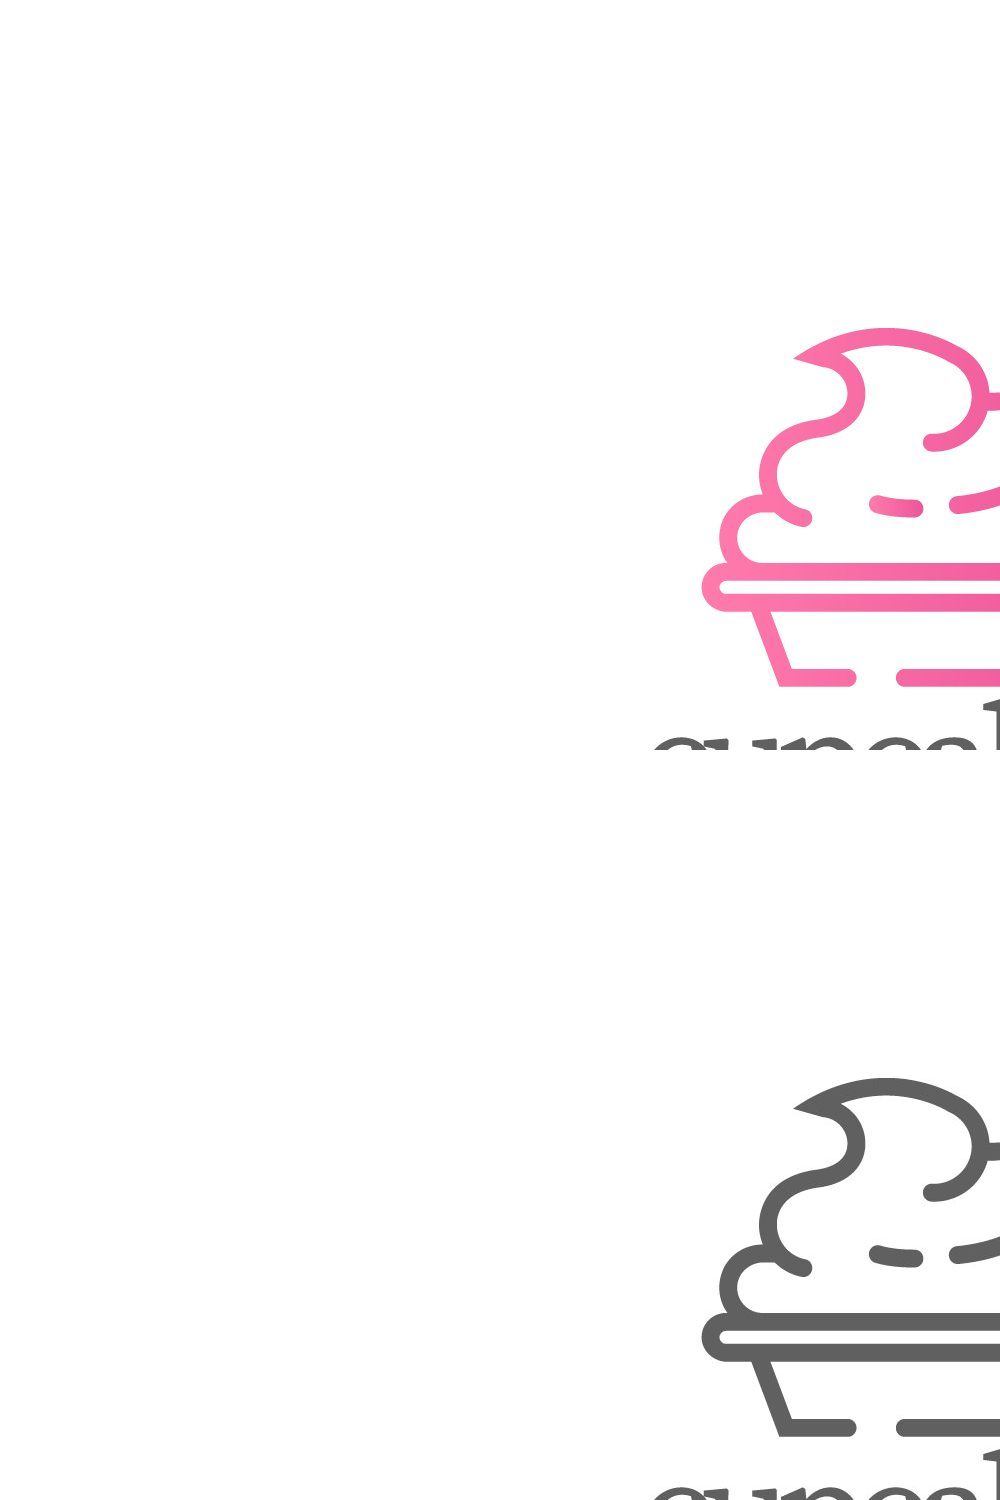 cupcakes logo pinterest preview image.